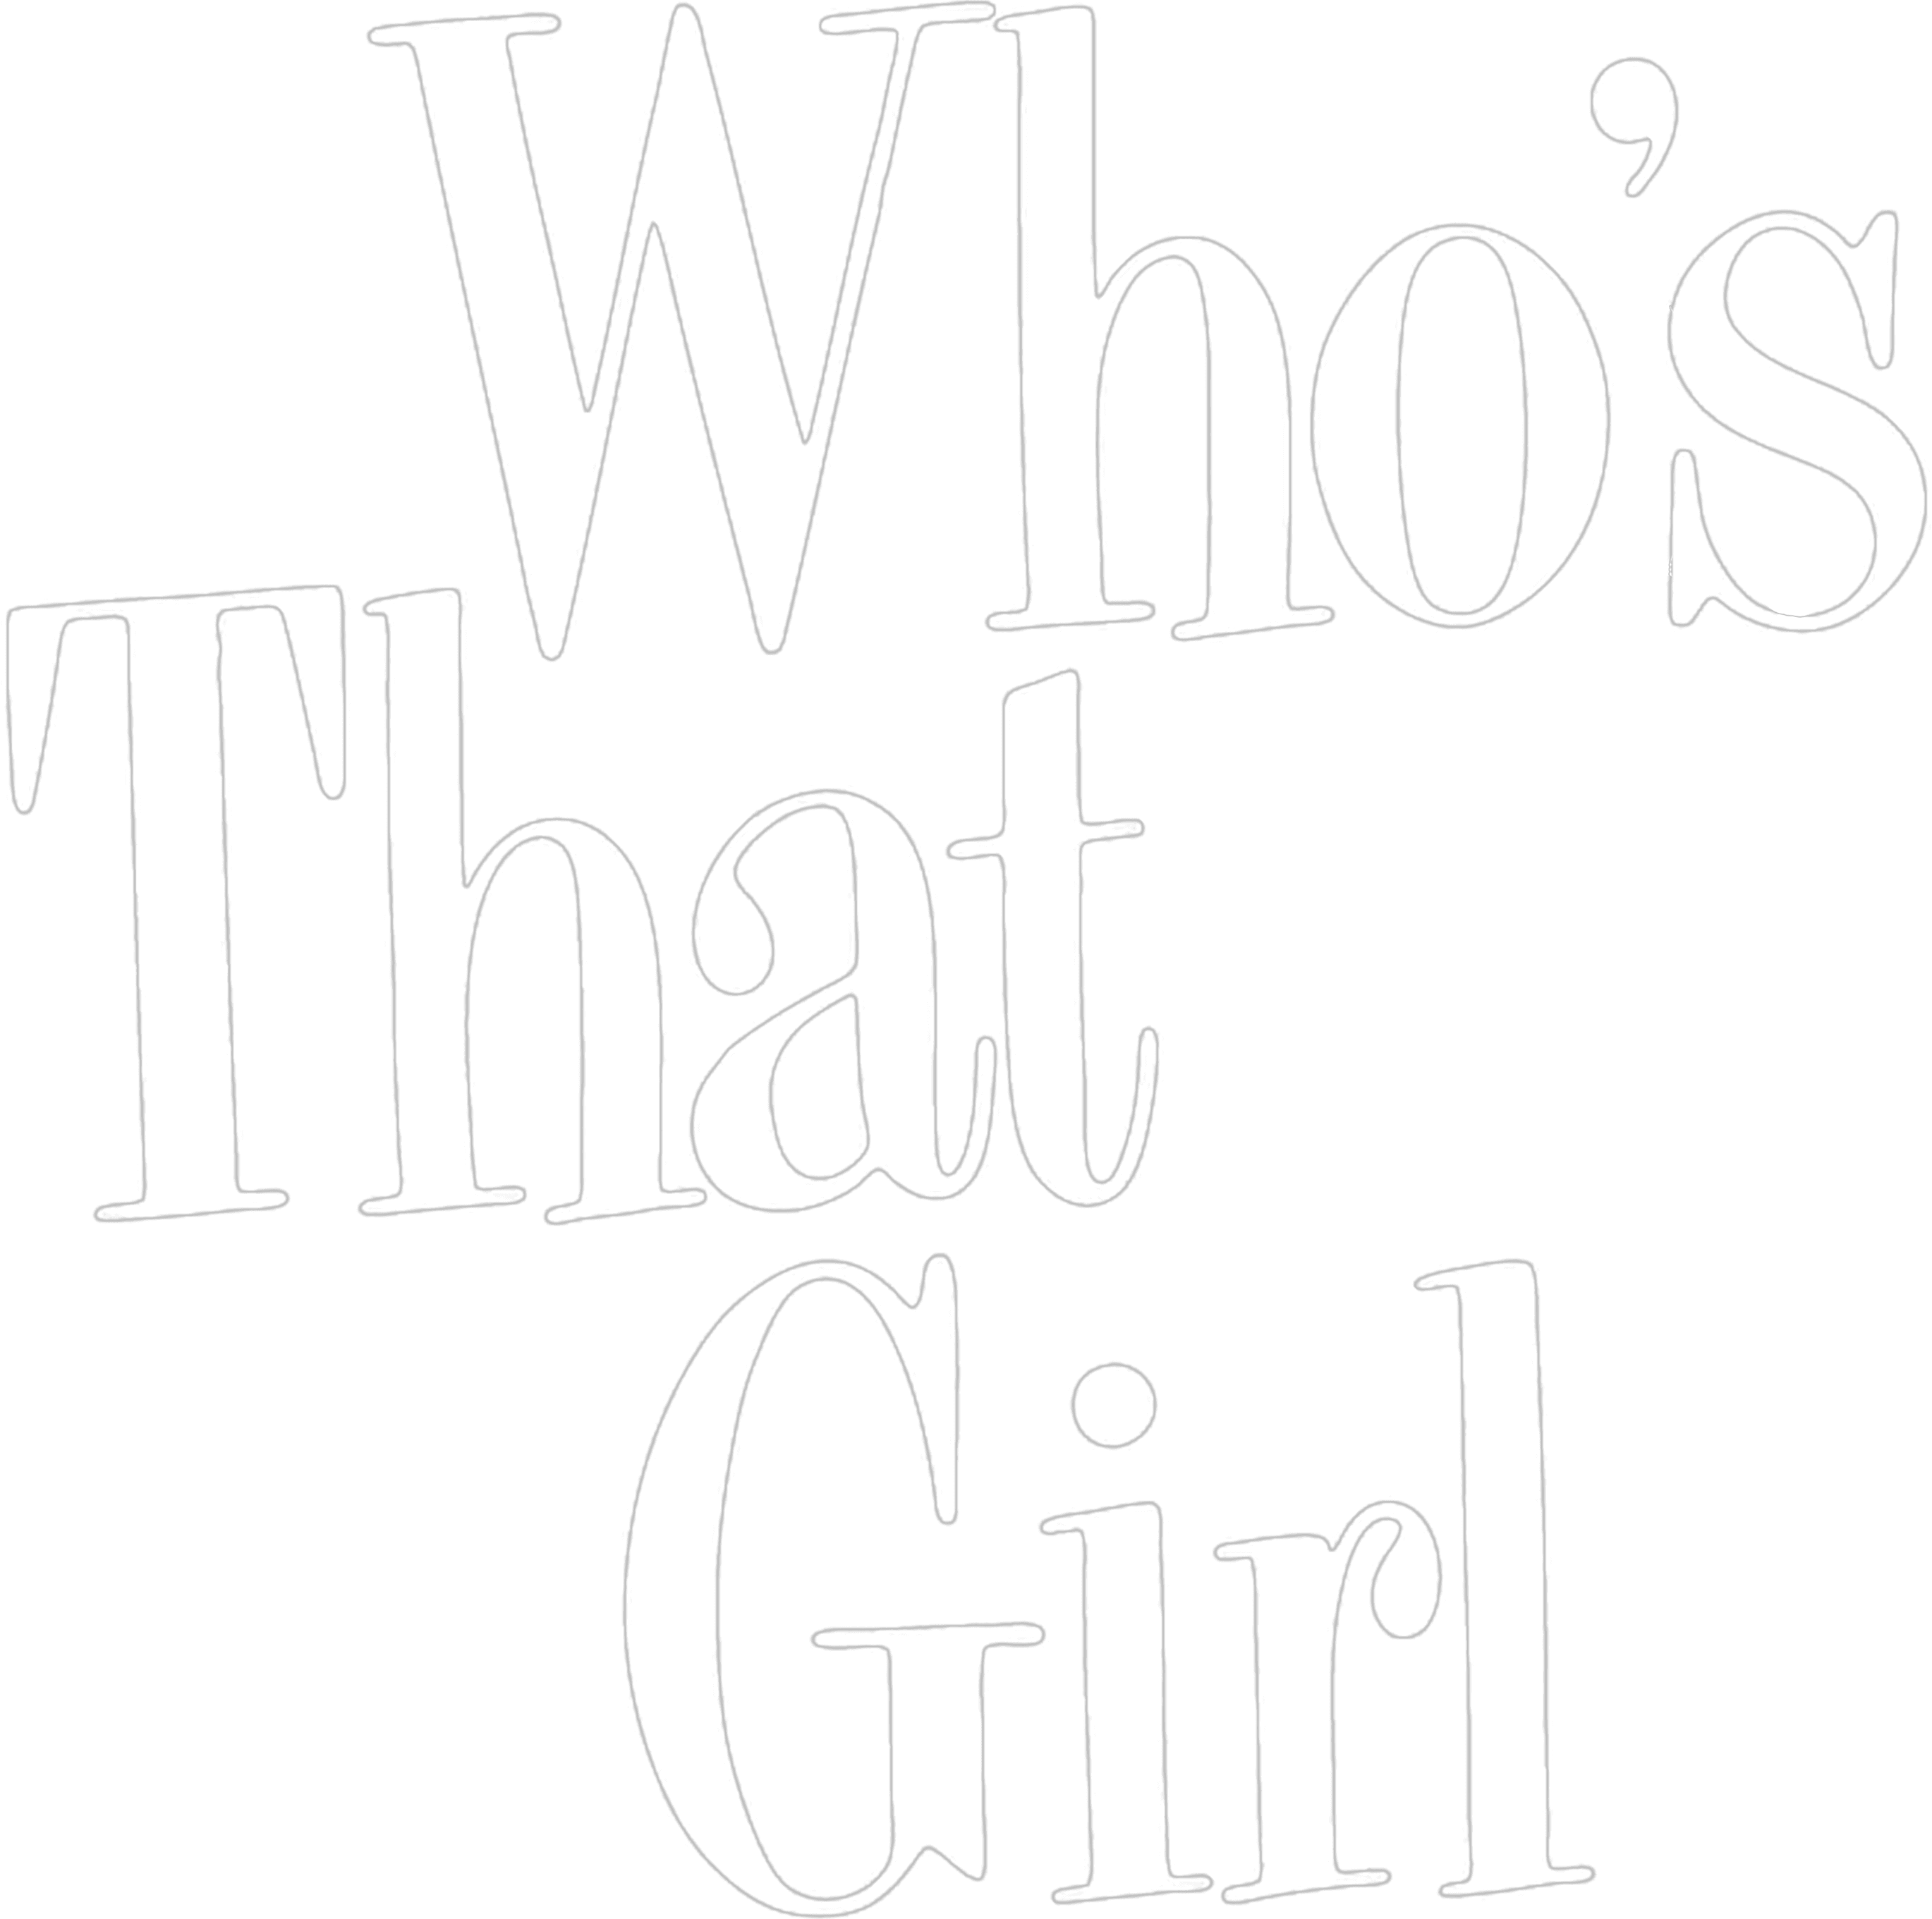 Who's That Girl logo